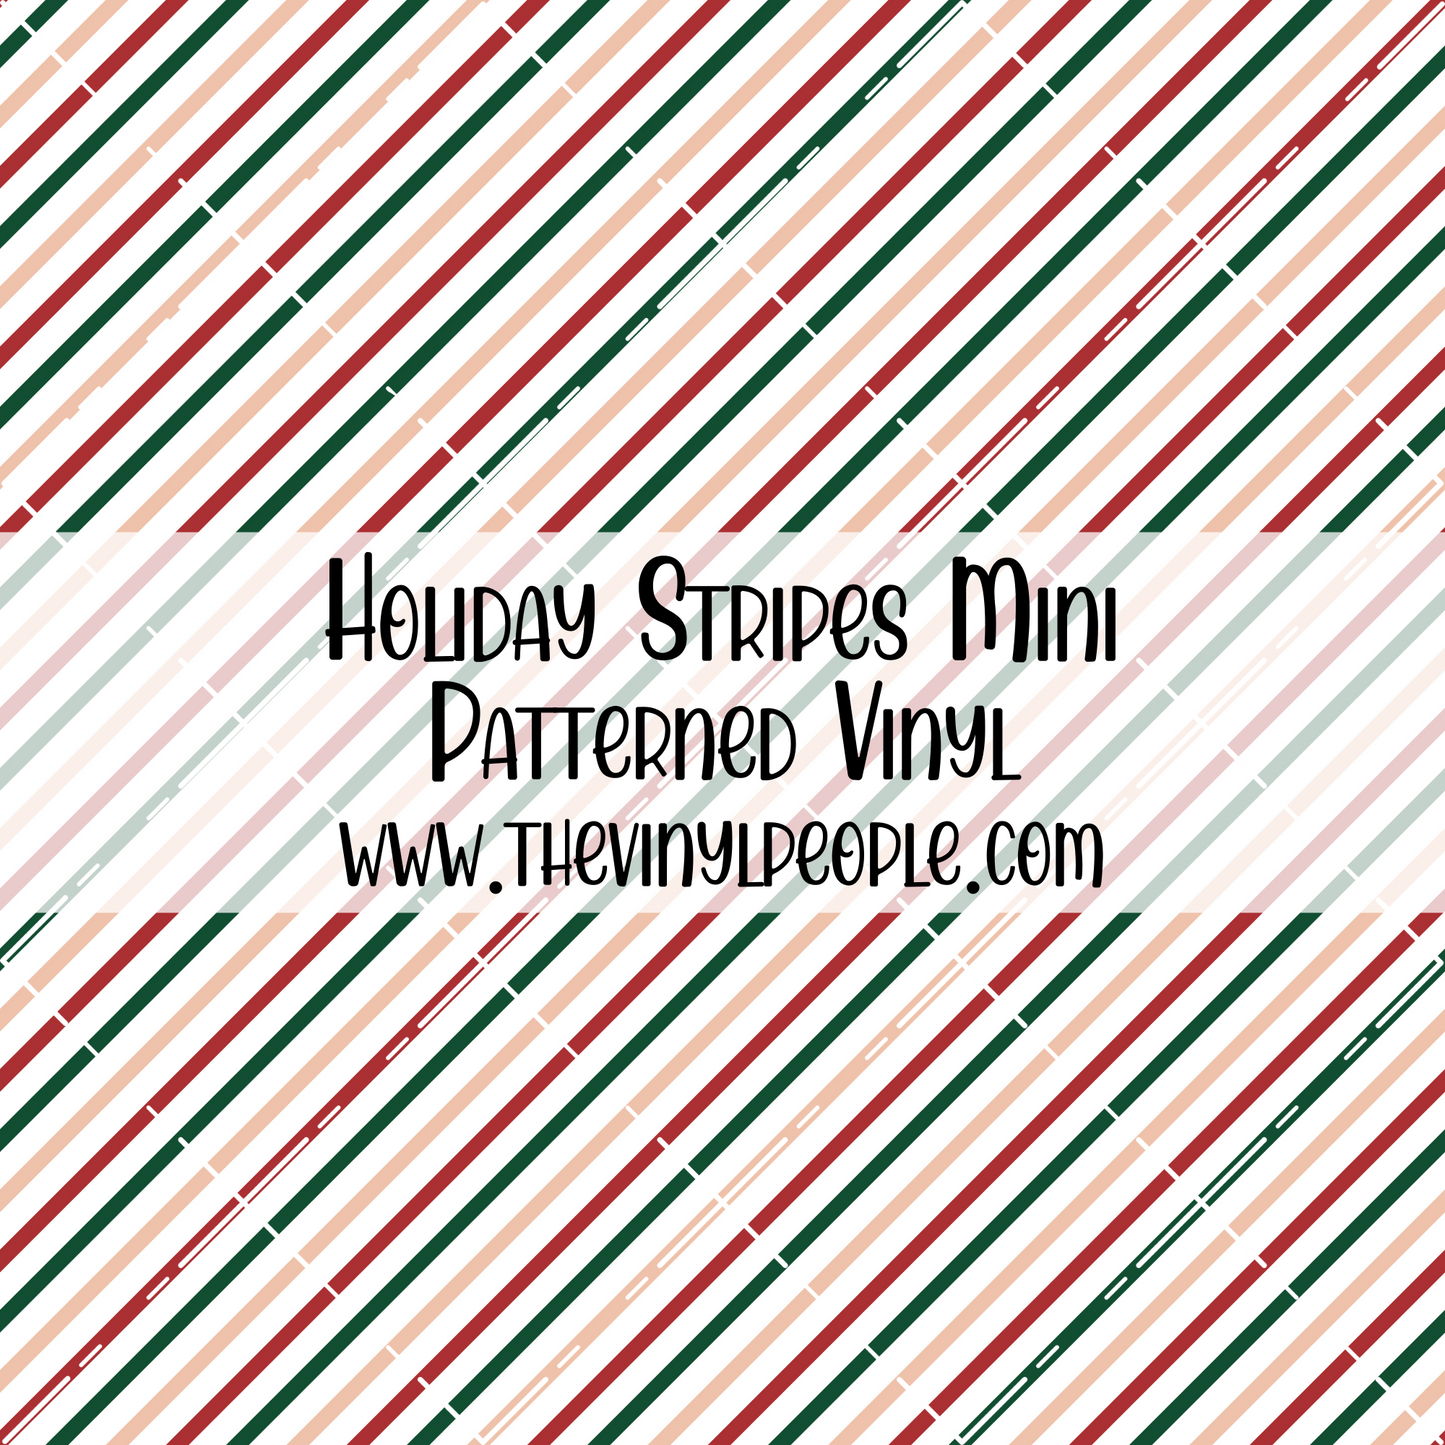 Holiday Stripes Patterned Vinyl